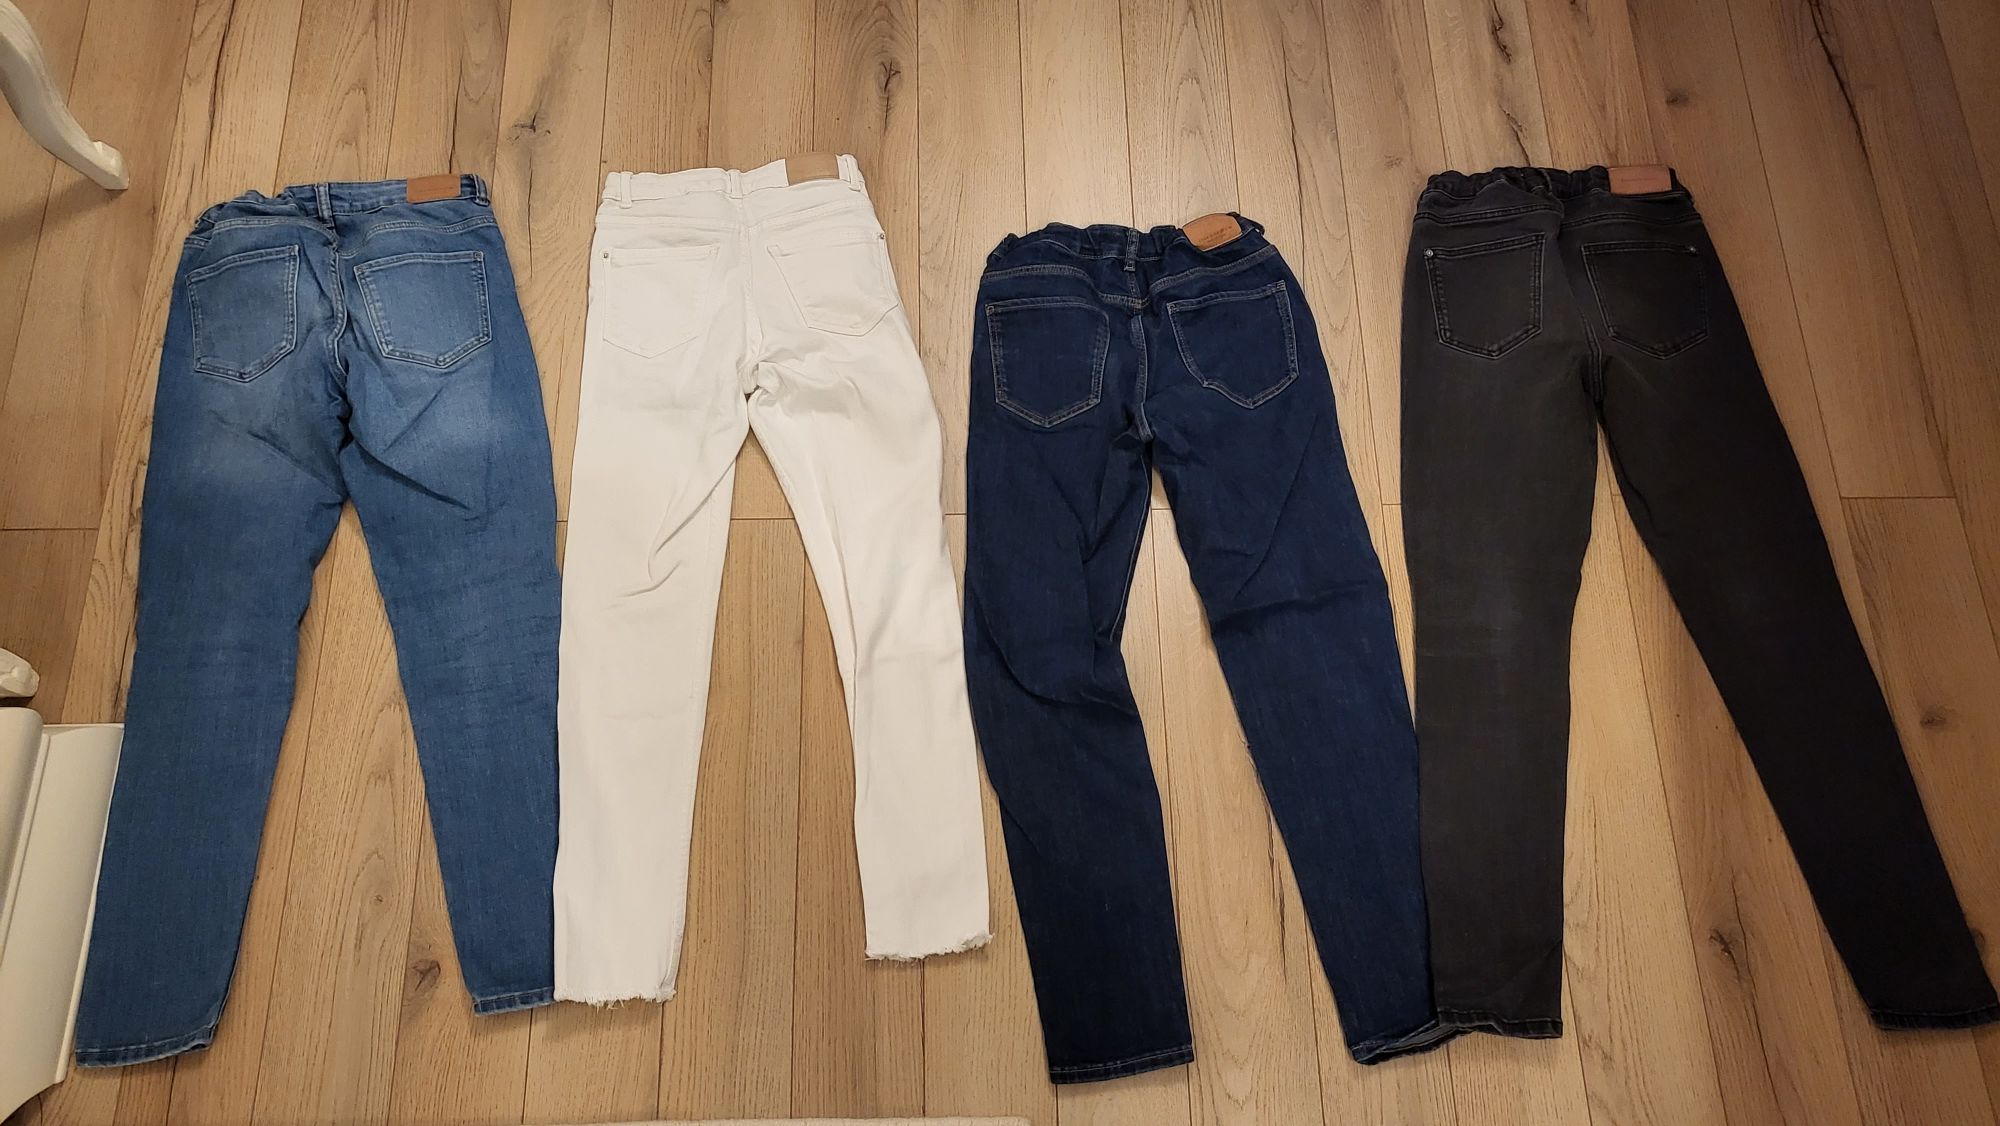 Blugi/ Jeans Zara copii/fete  11-12 ani  152 cm, 4 perechi